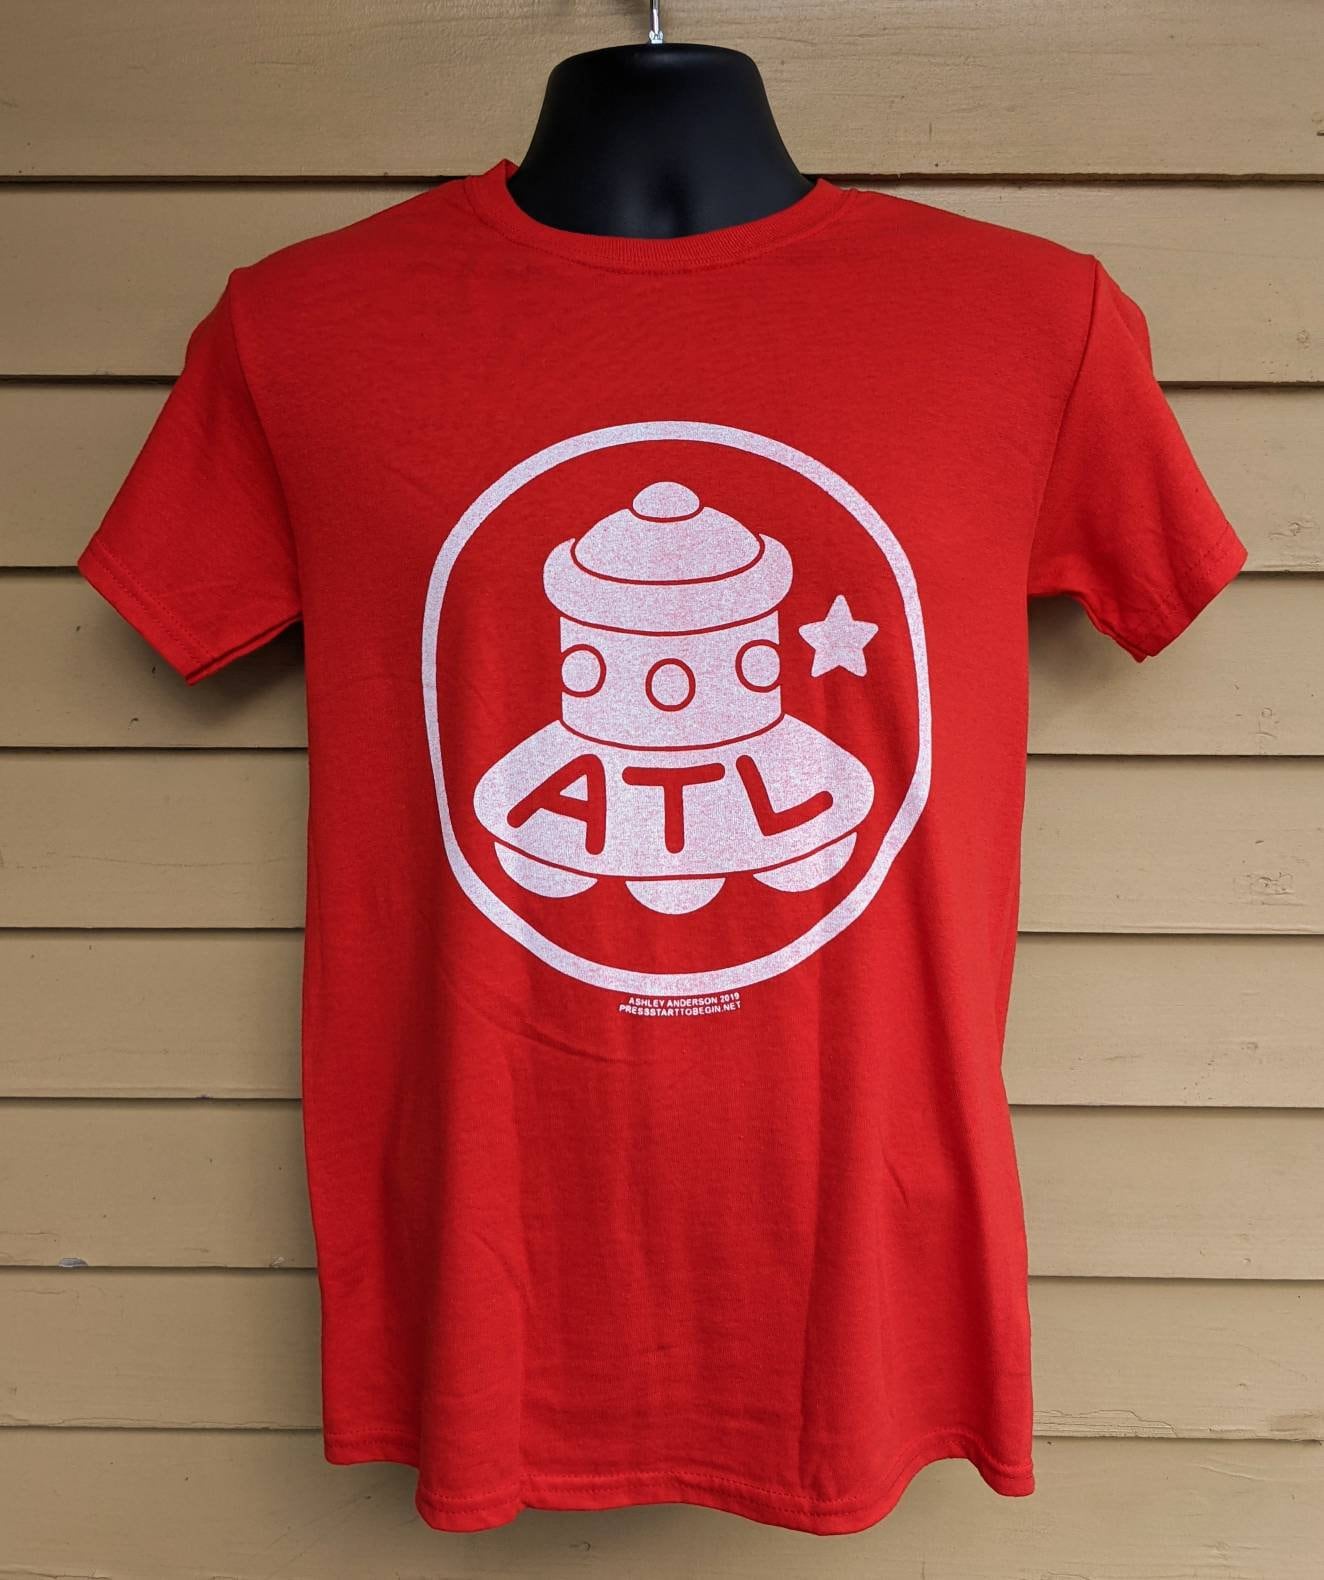 ATL SYG T-shirts Atliens Atlanta Script Logo T-Shirt